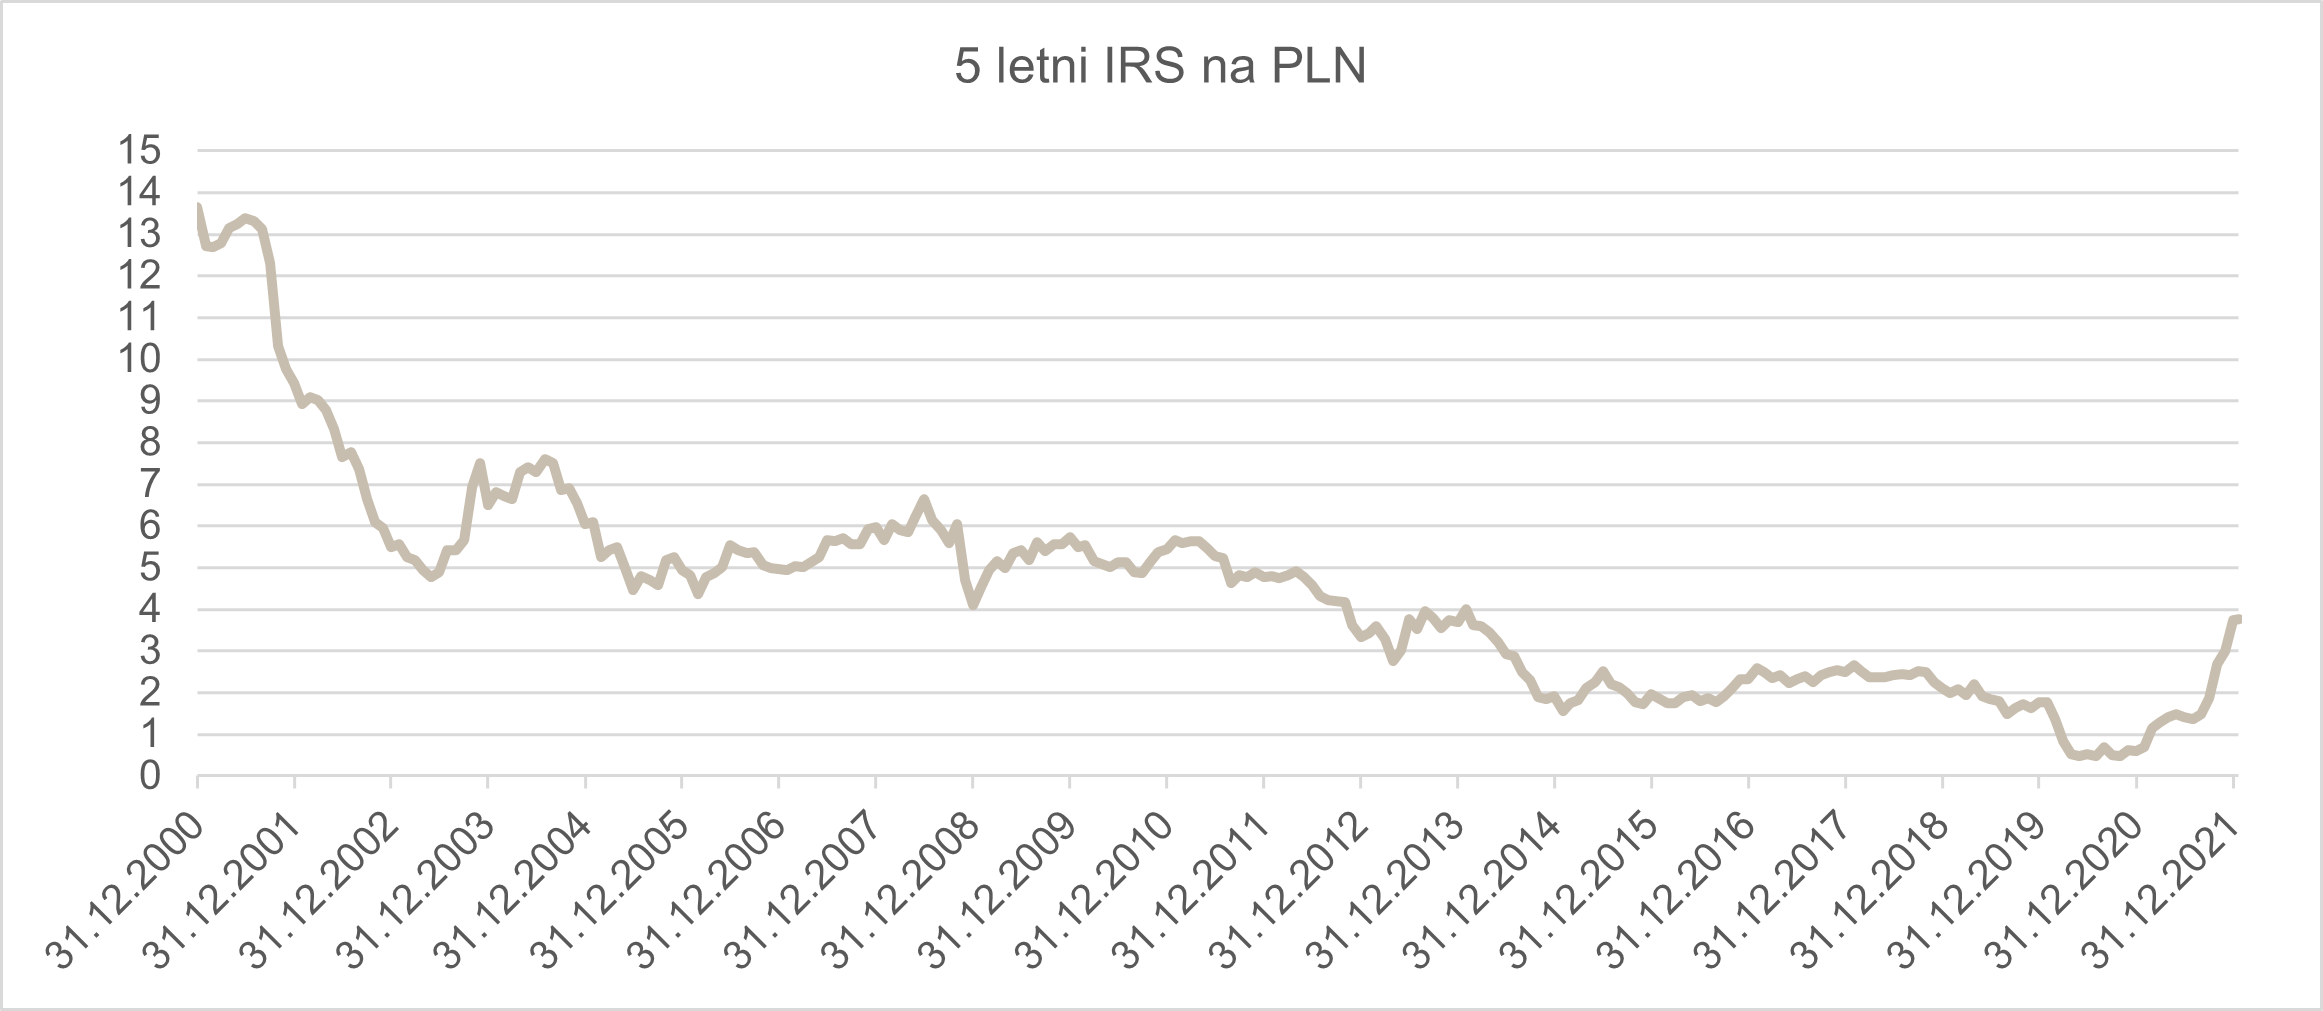 5 letni IRS na PLN